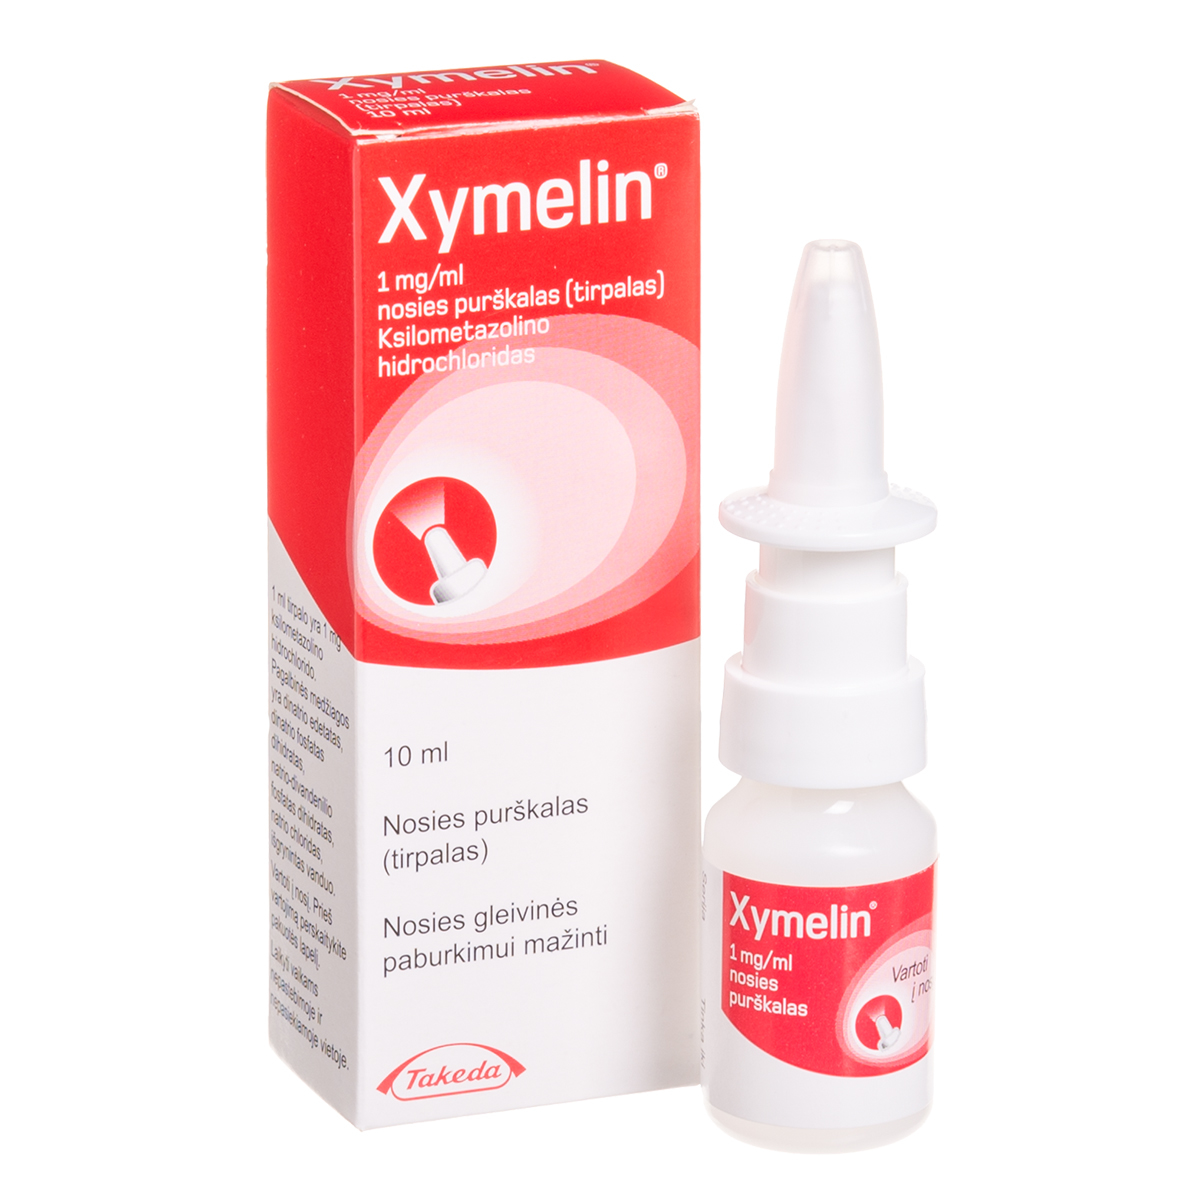 XYMELIN, 1 mg/ml, nosies purškalas (tirpalas), 10 ml